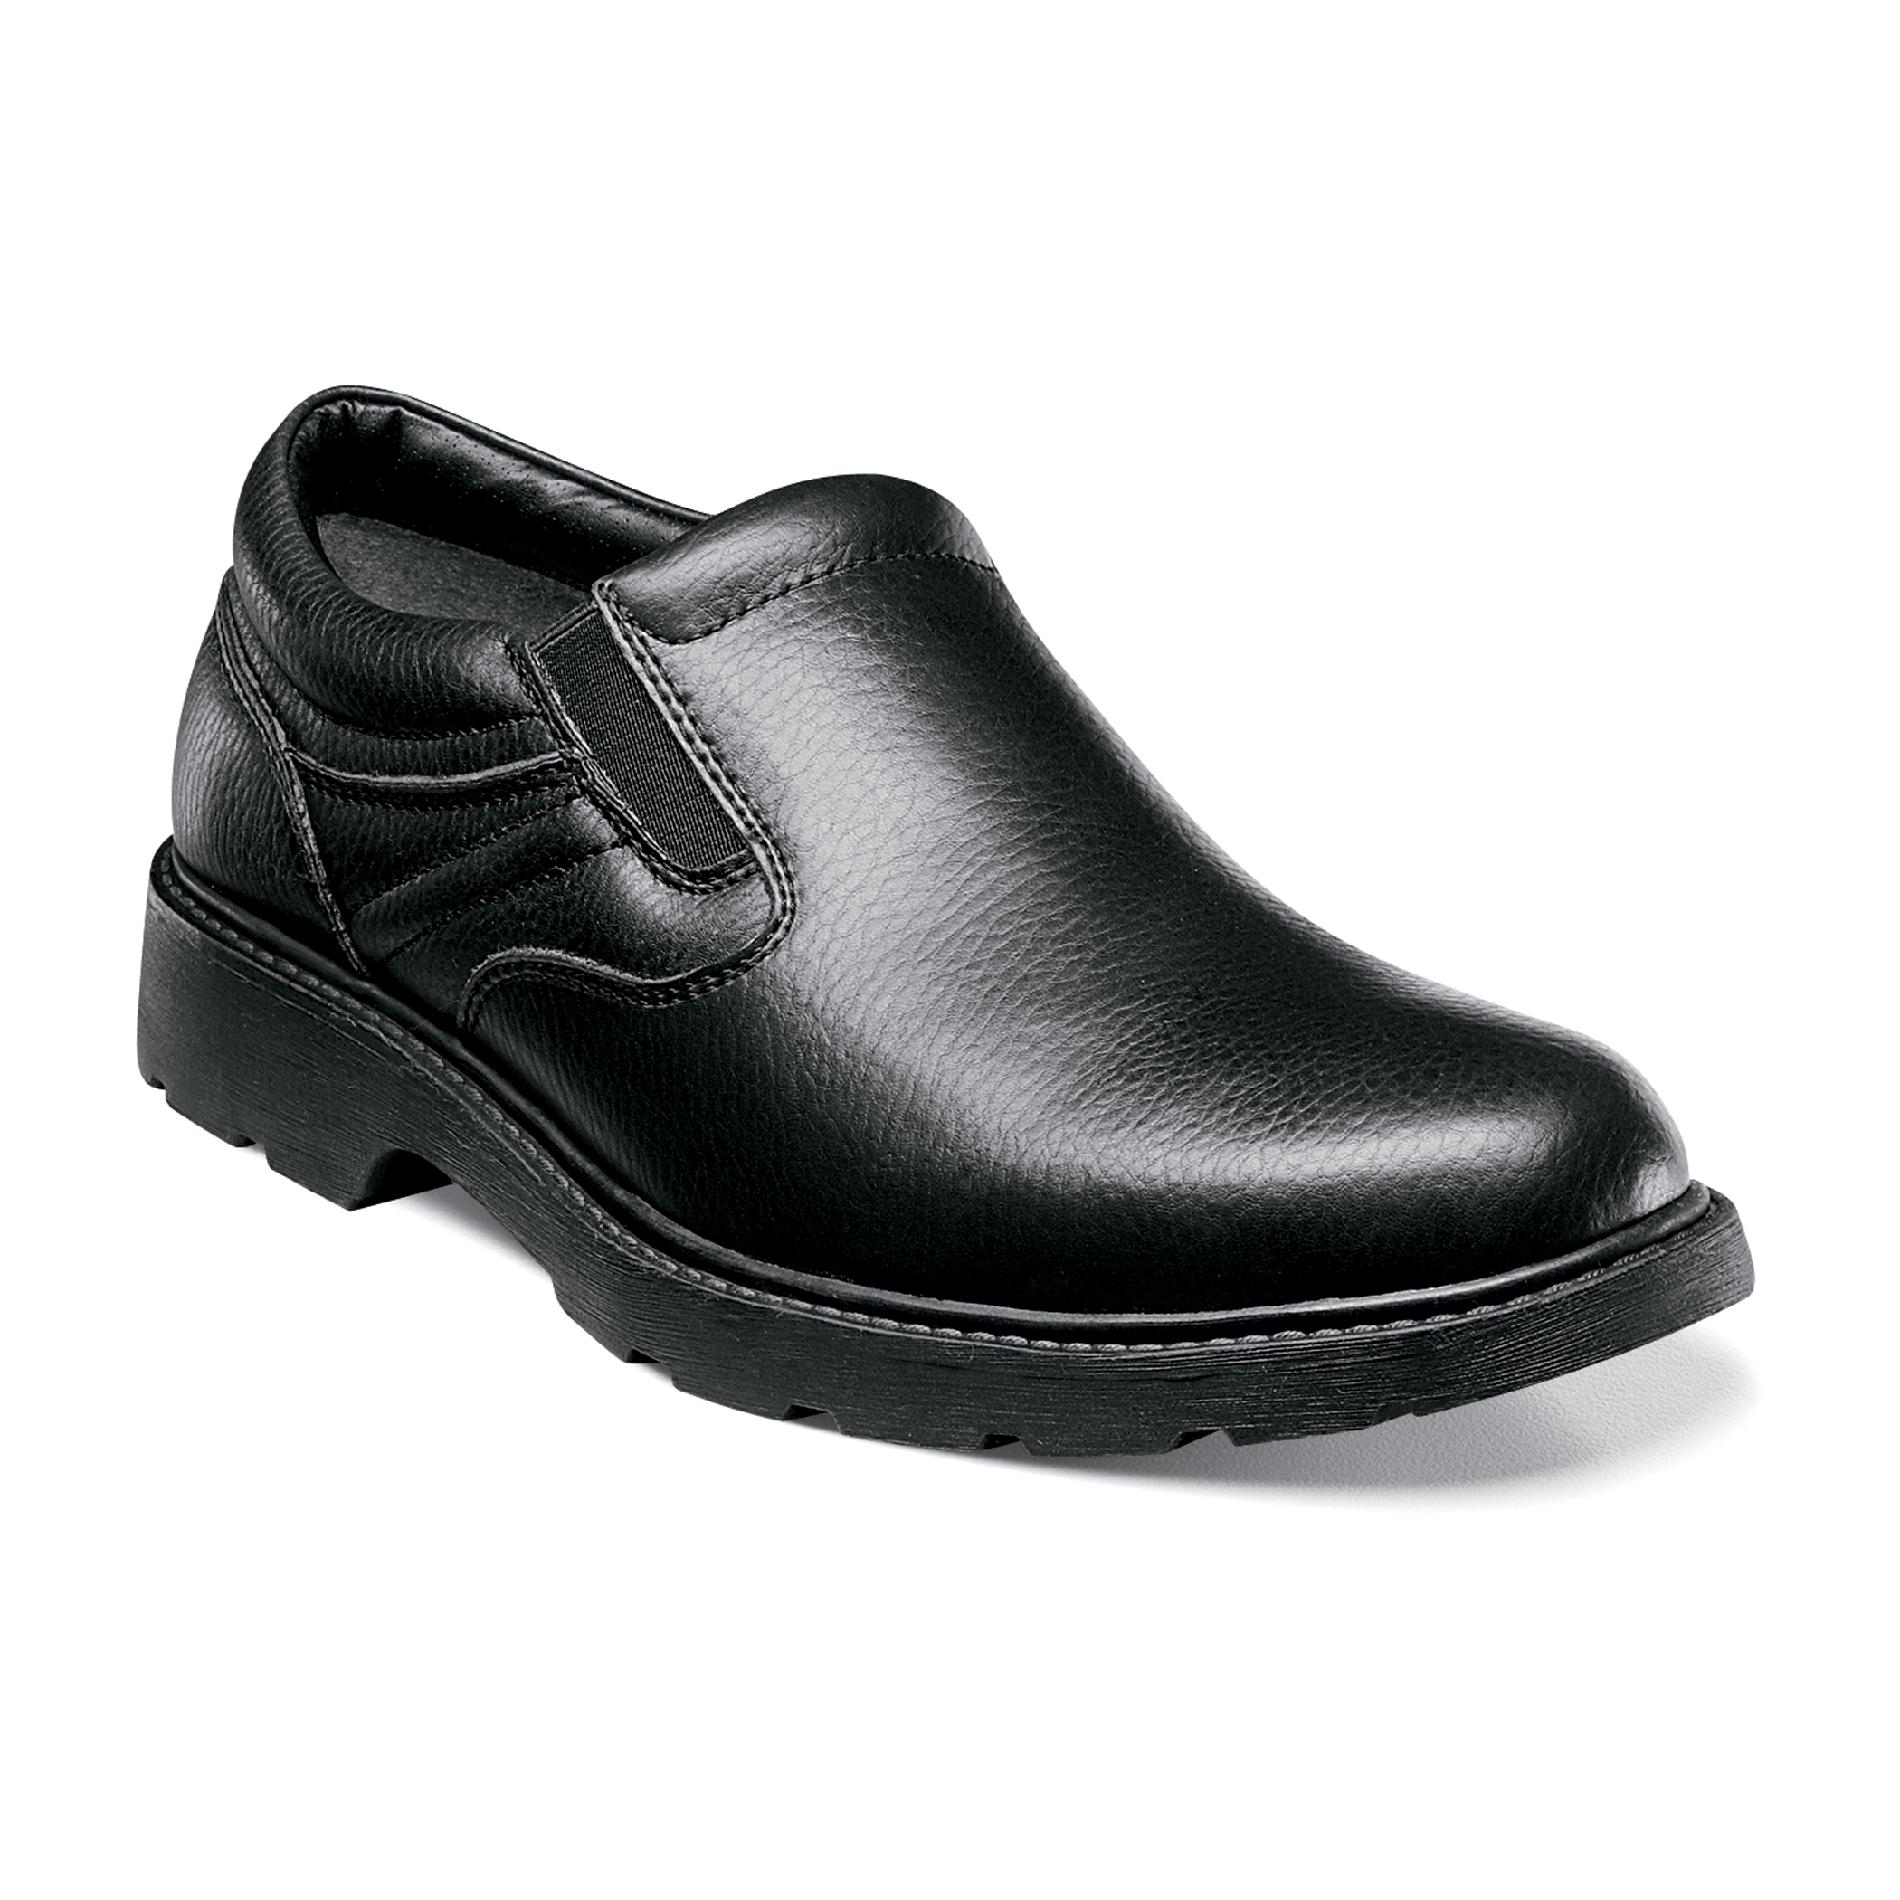 Nunn Bush Men's Casual Shoe Greendale Wide Avail - Black